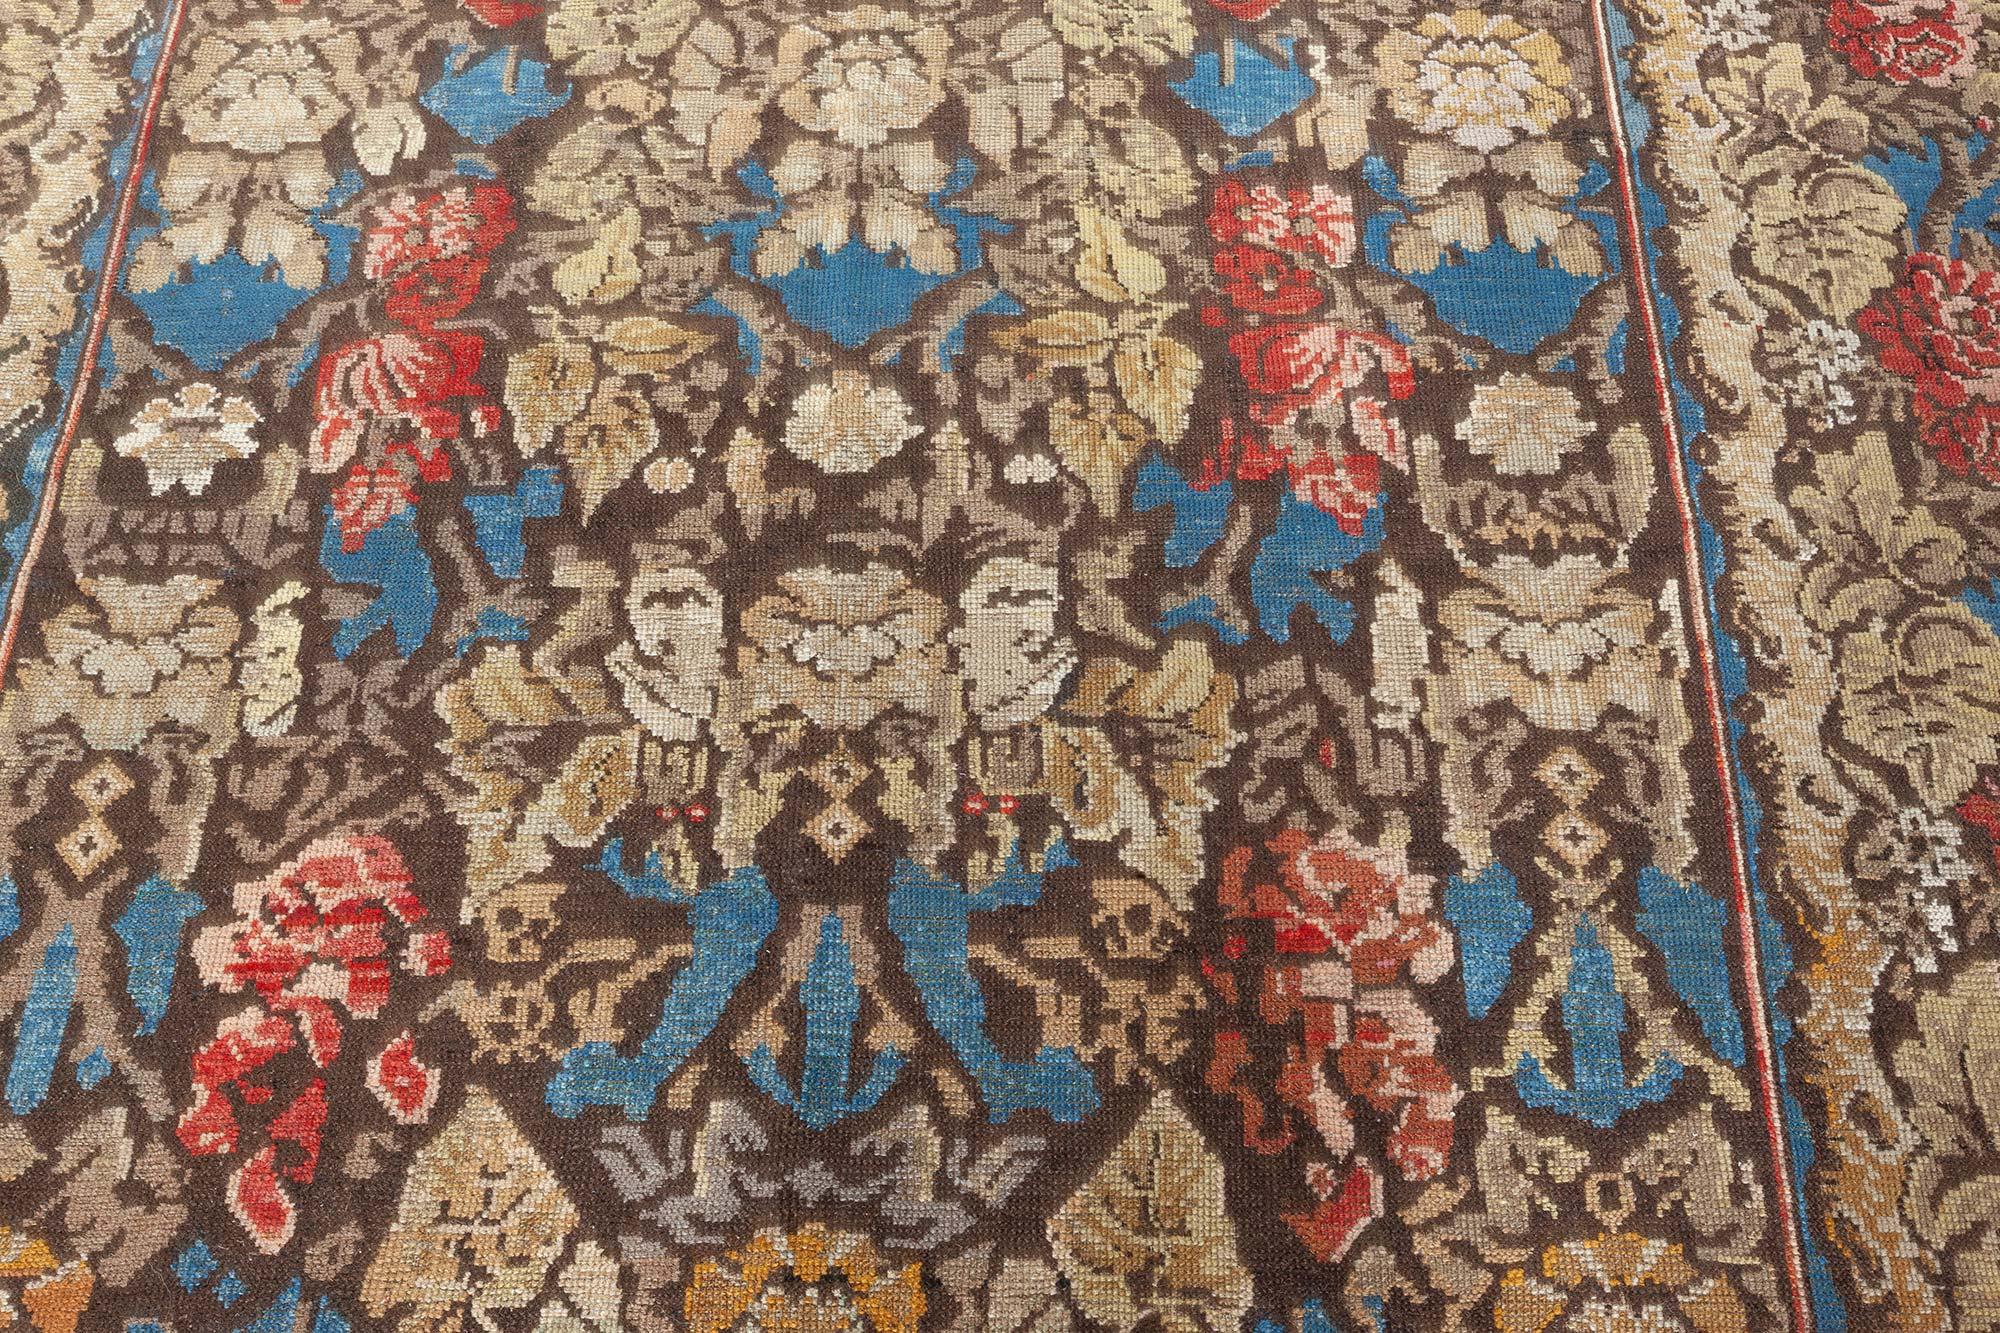 19th Century Ukrainian rug
Size: 5'9